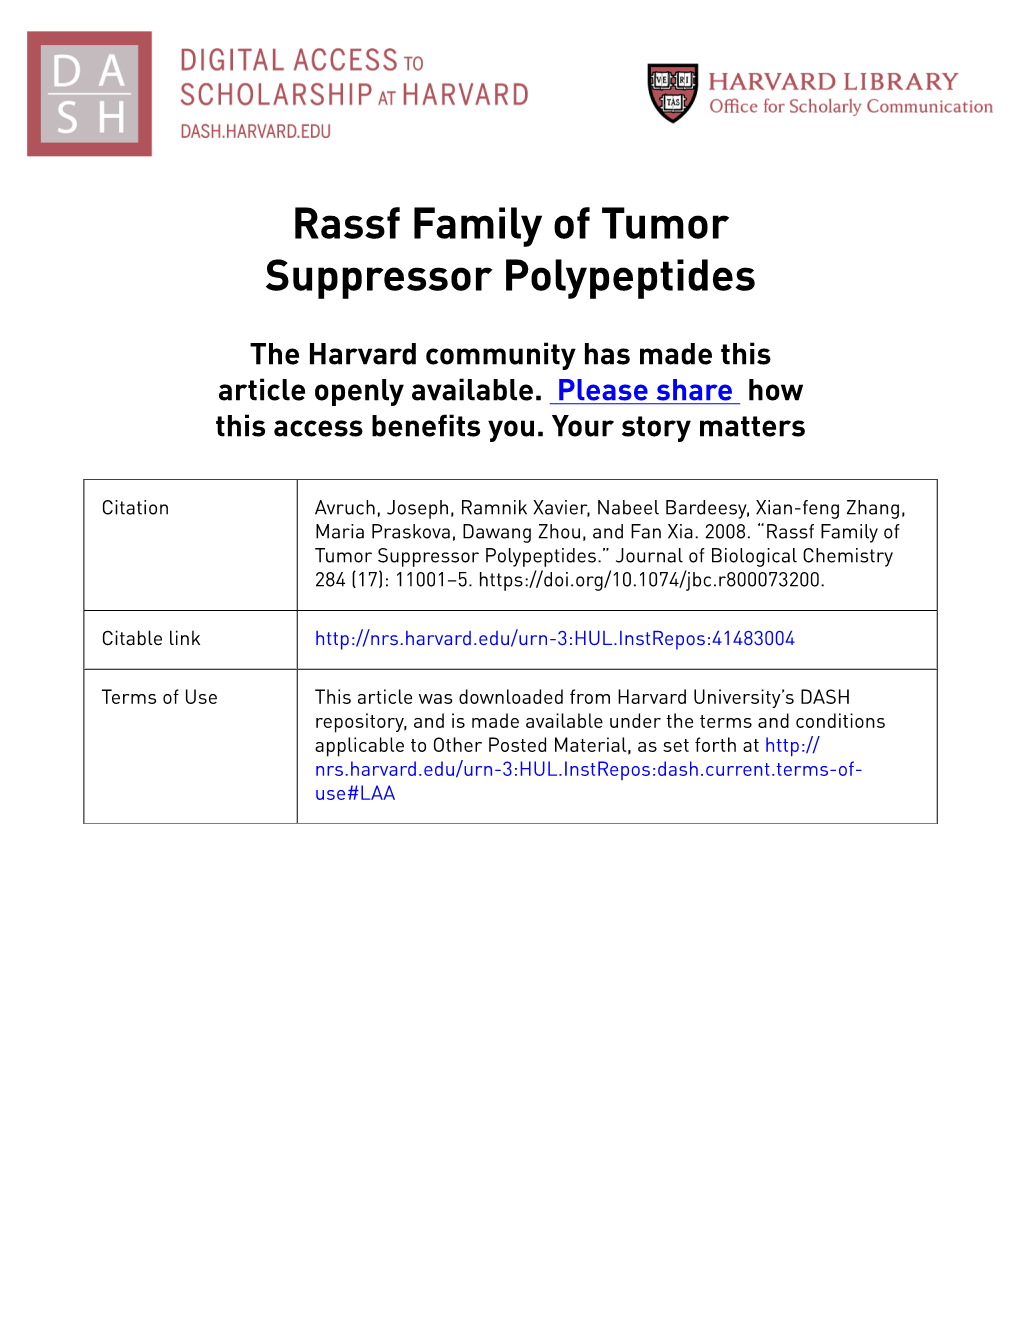 Rassf Family of Tumor Suppressor Polypeptides